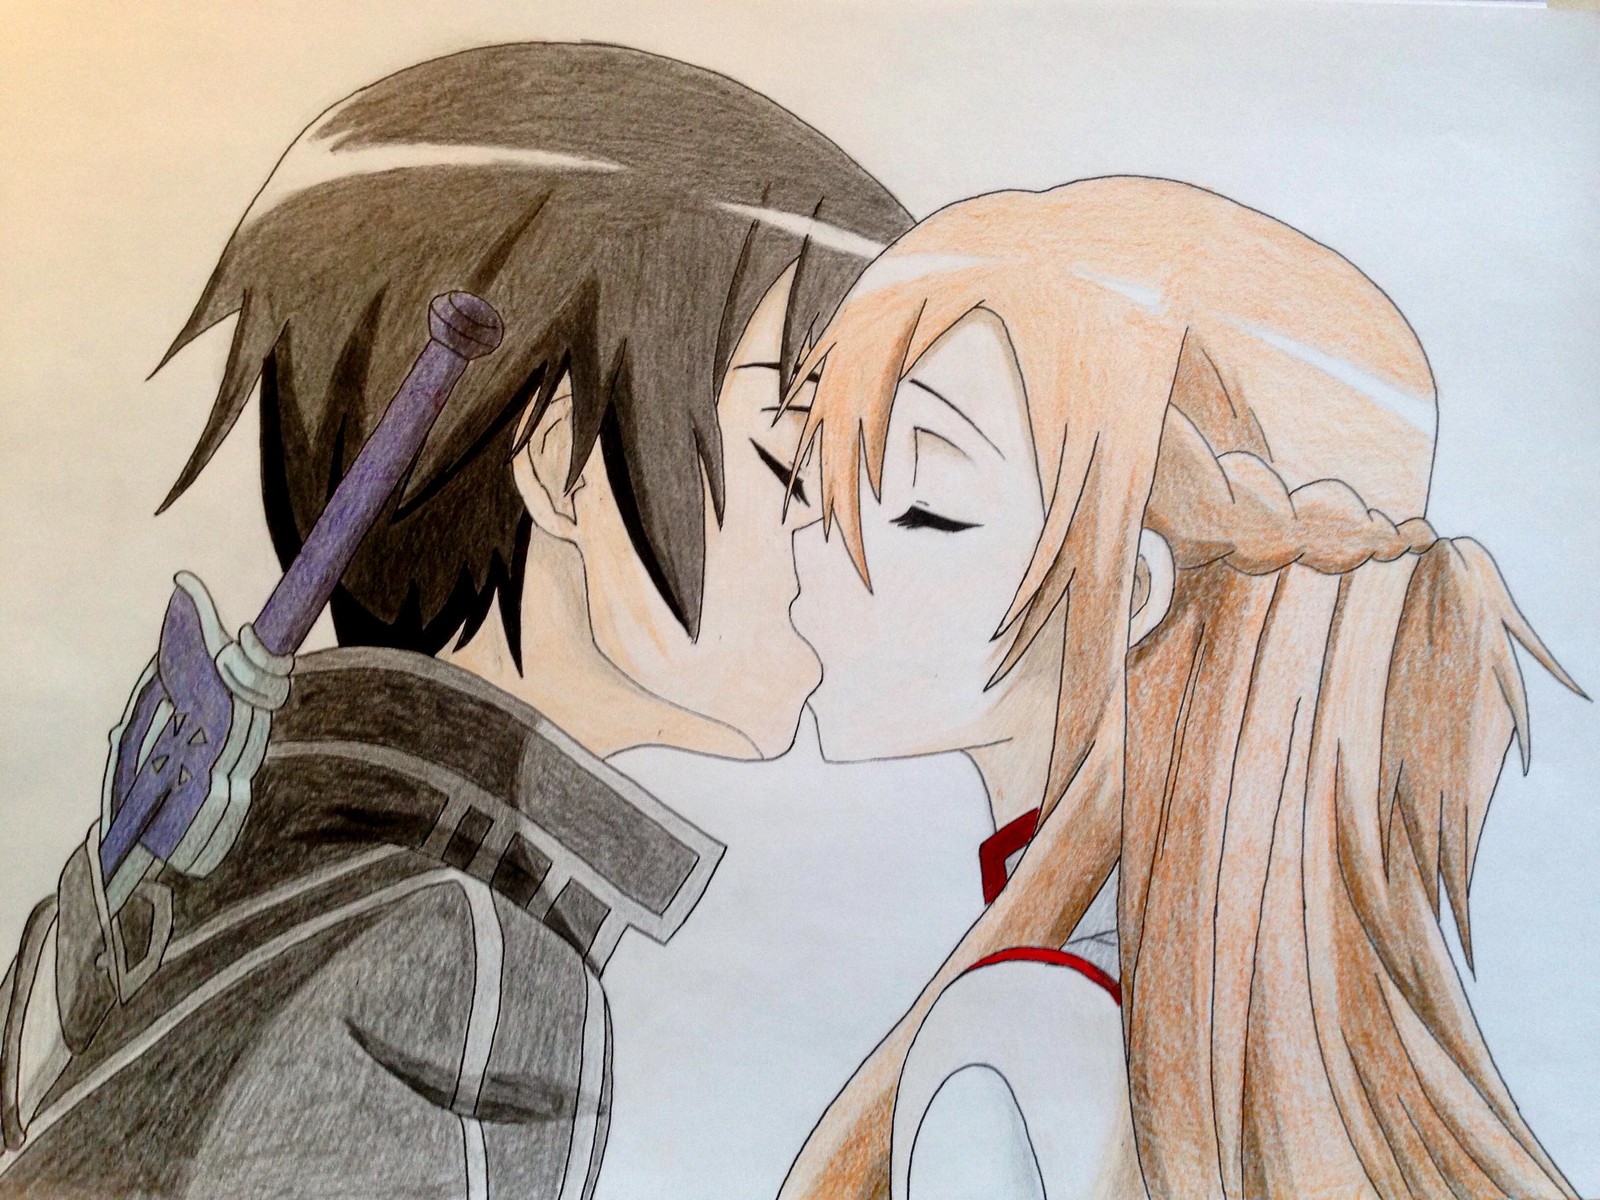 Kirito and Asuna kiss - Sword Art Online.